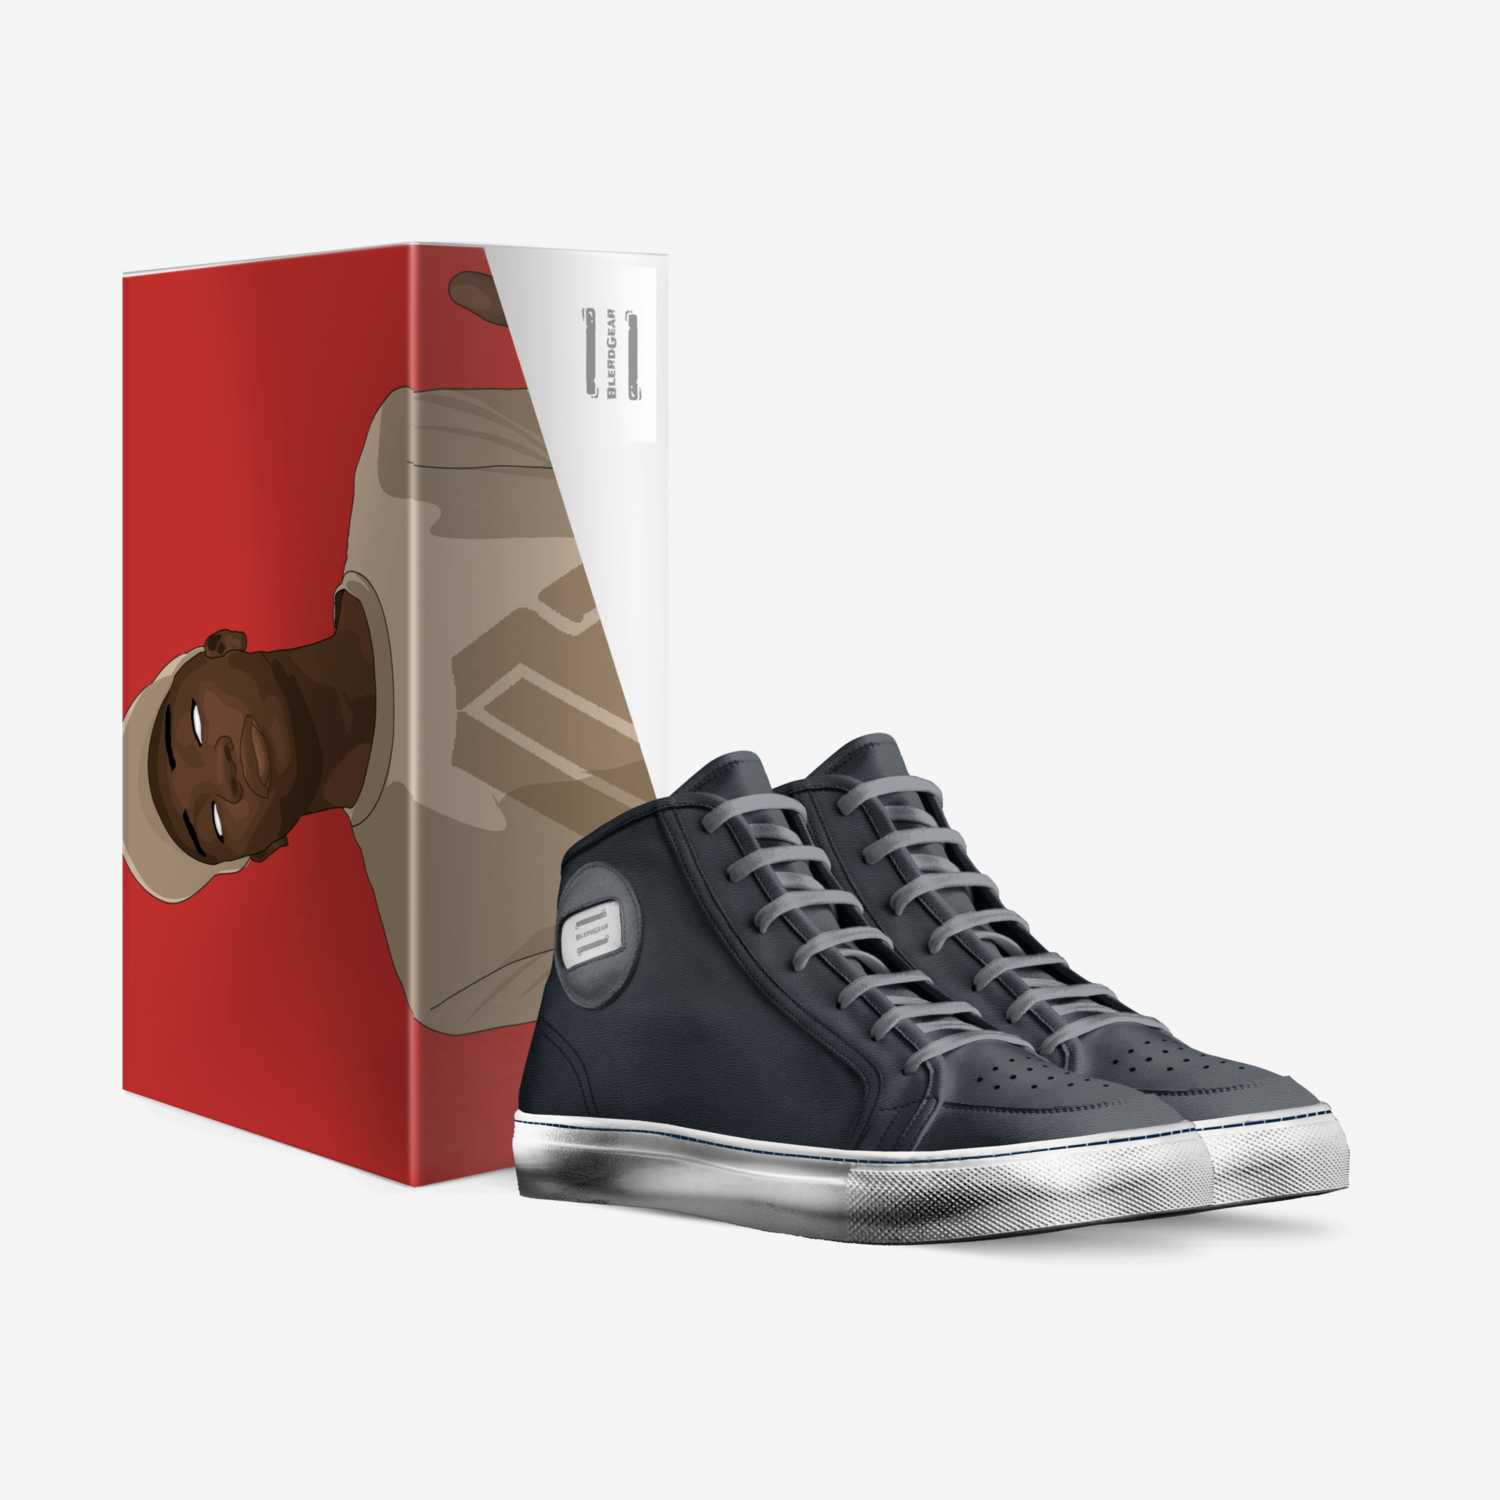 BlerdGear custom made in Italy shoes by Herbert L. Seward Iii | Box view